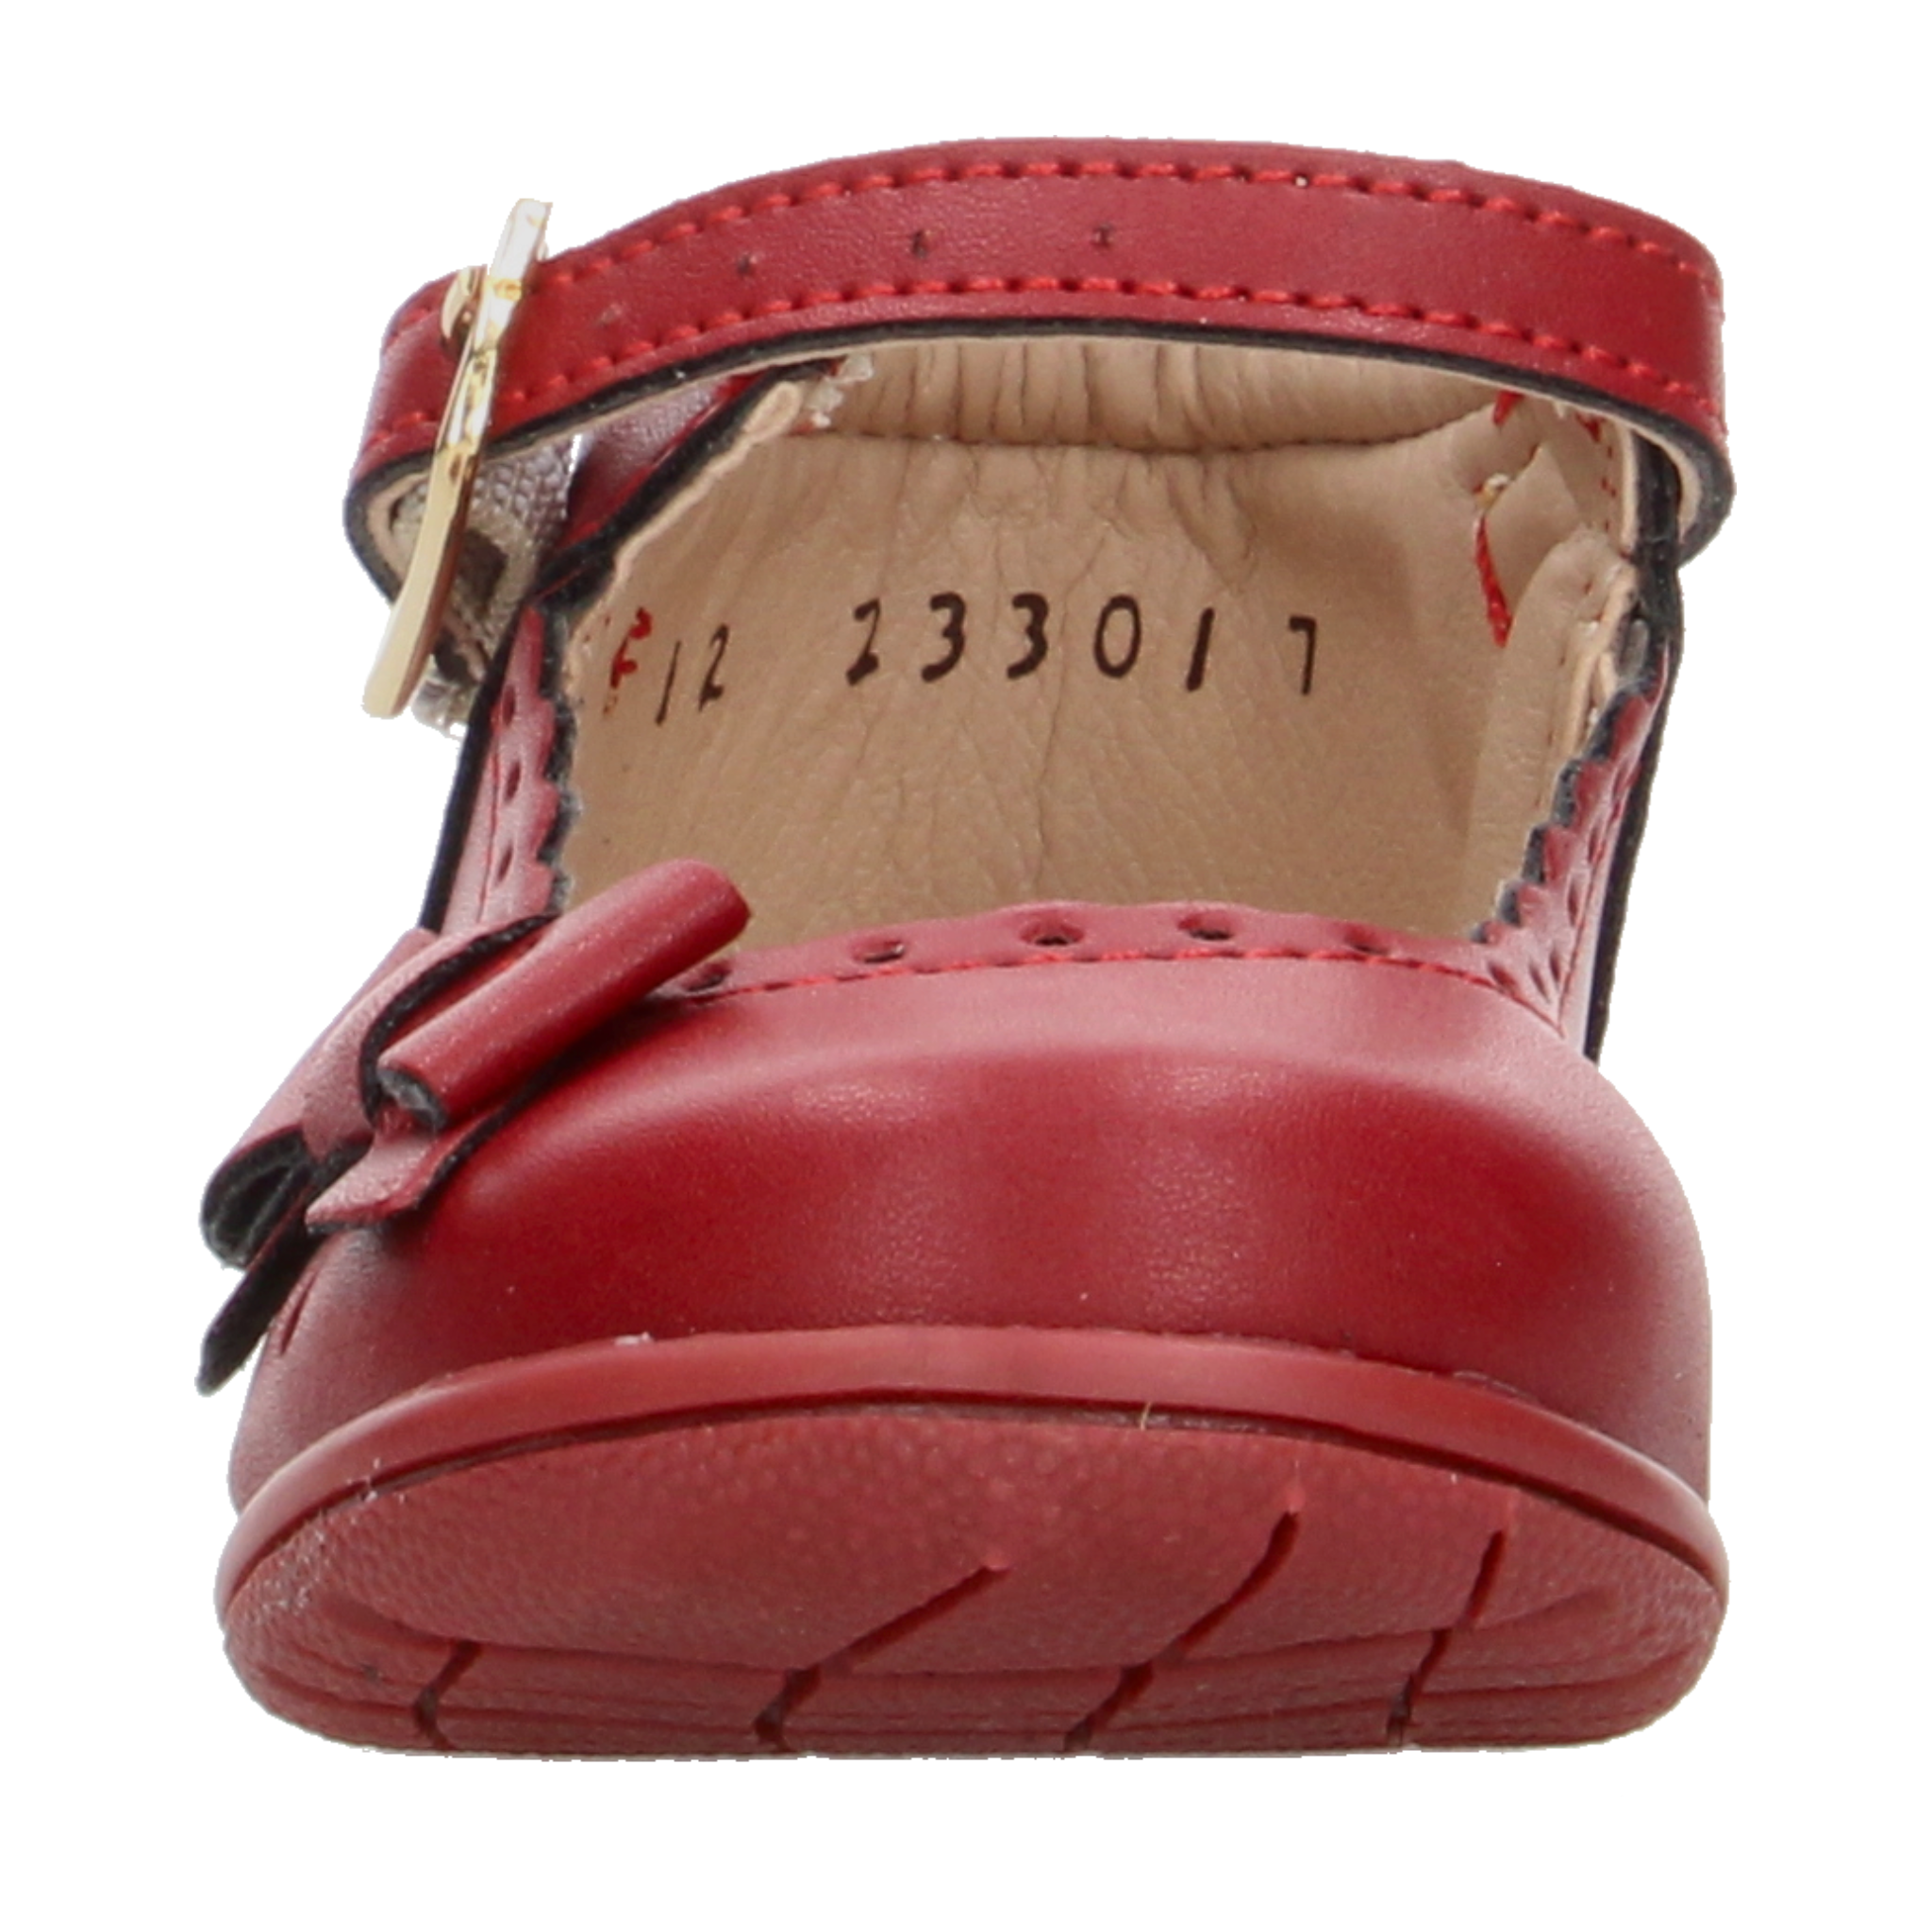 Zapato Casual Jakuna Rojo para Niña [JAK294]